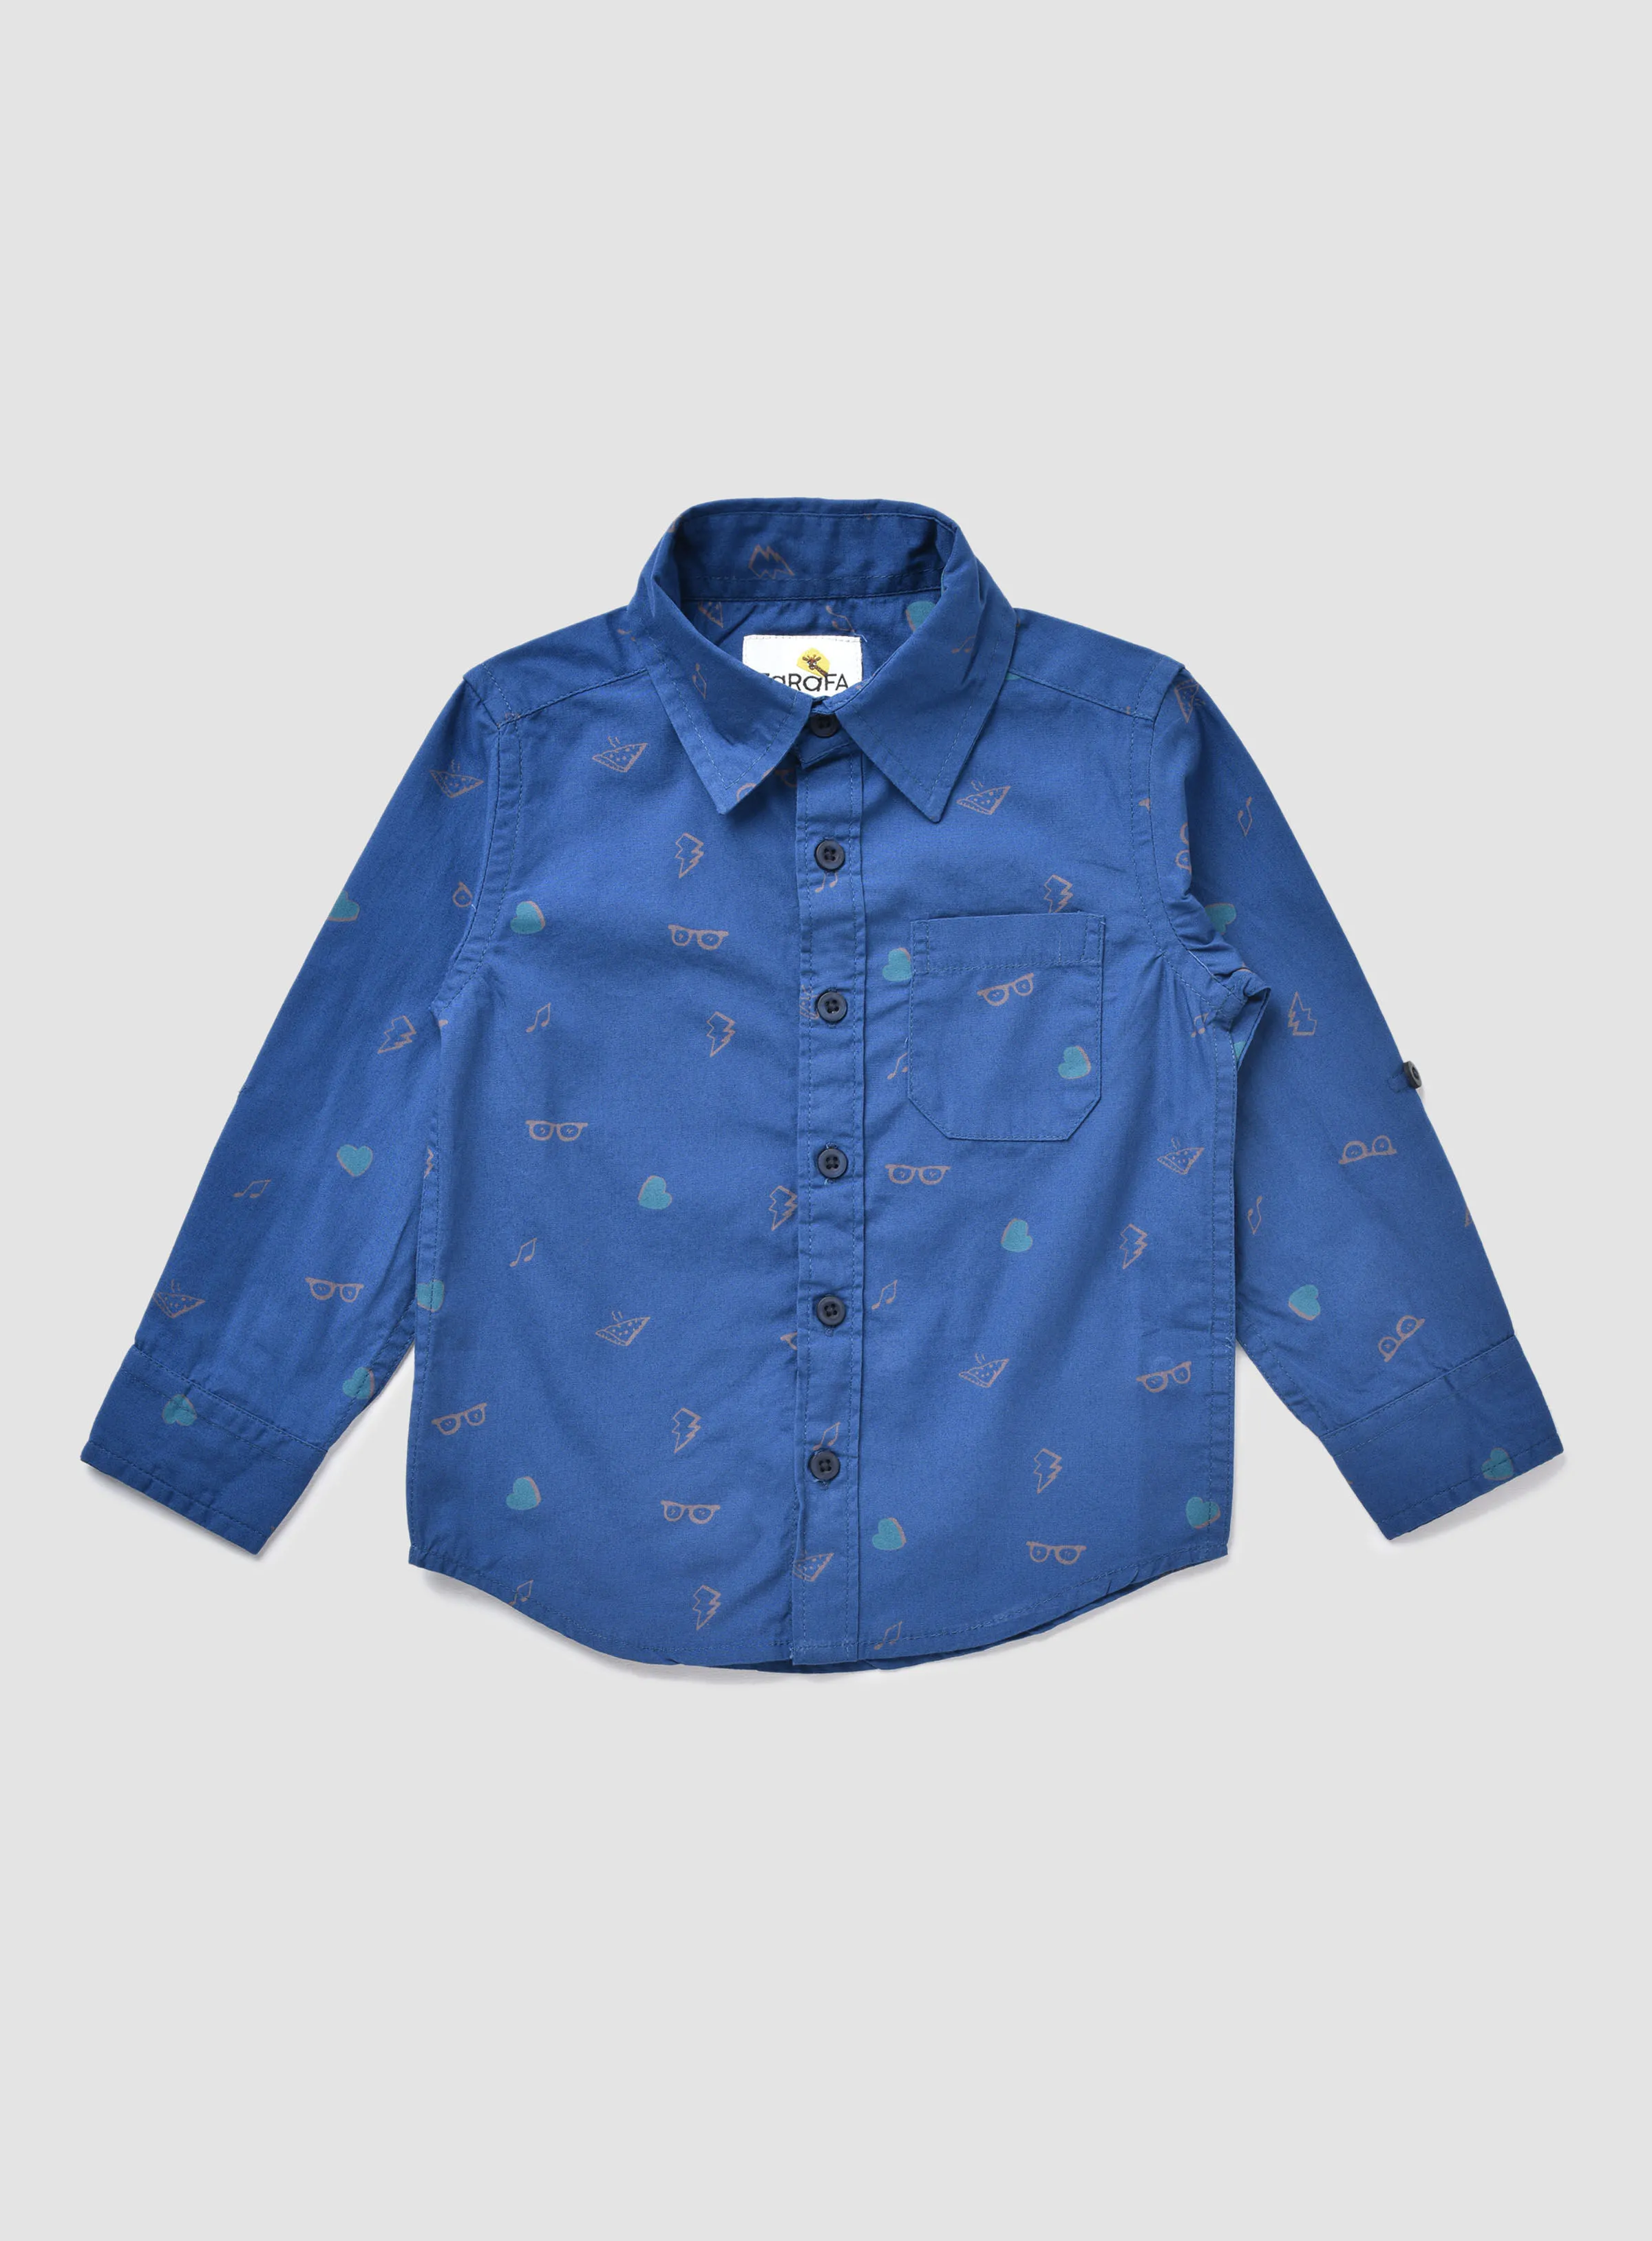 Zarafa Casual Printed Long Sleeves Shirt Blue